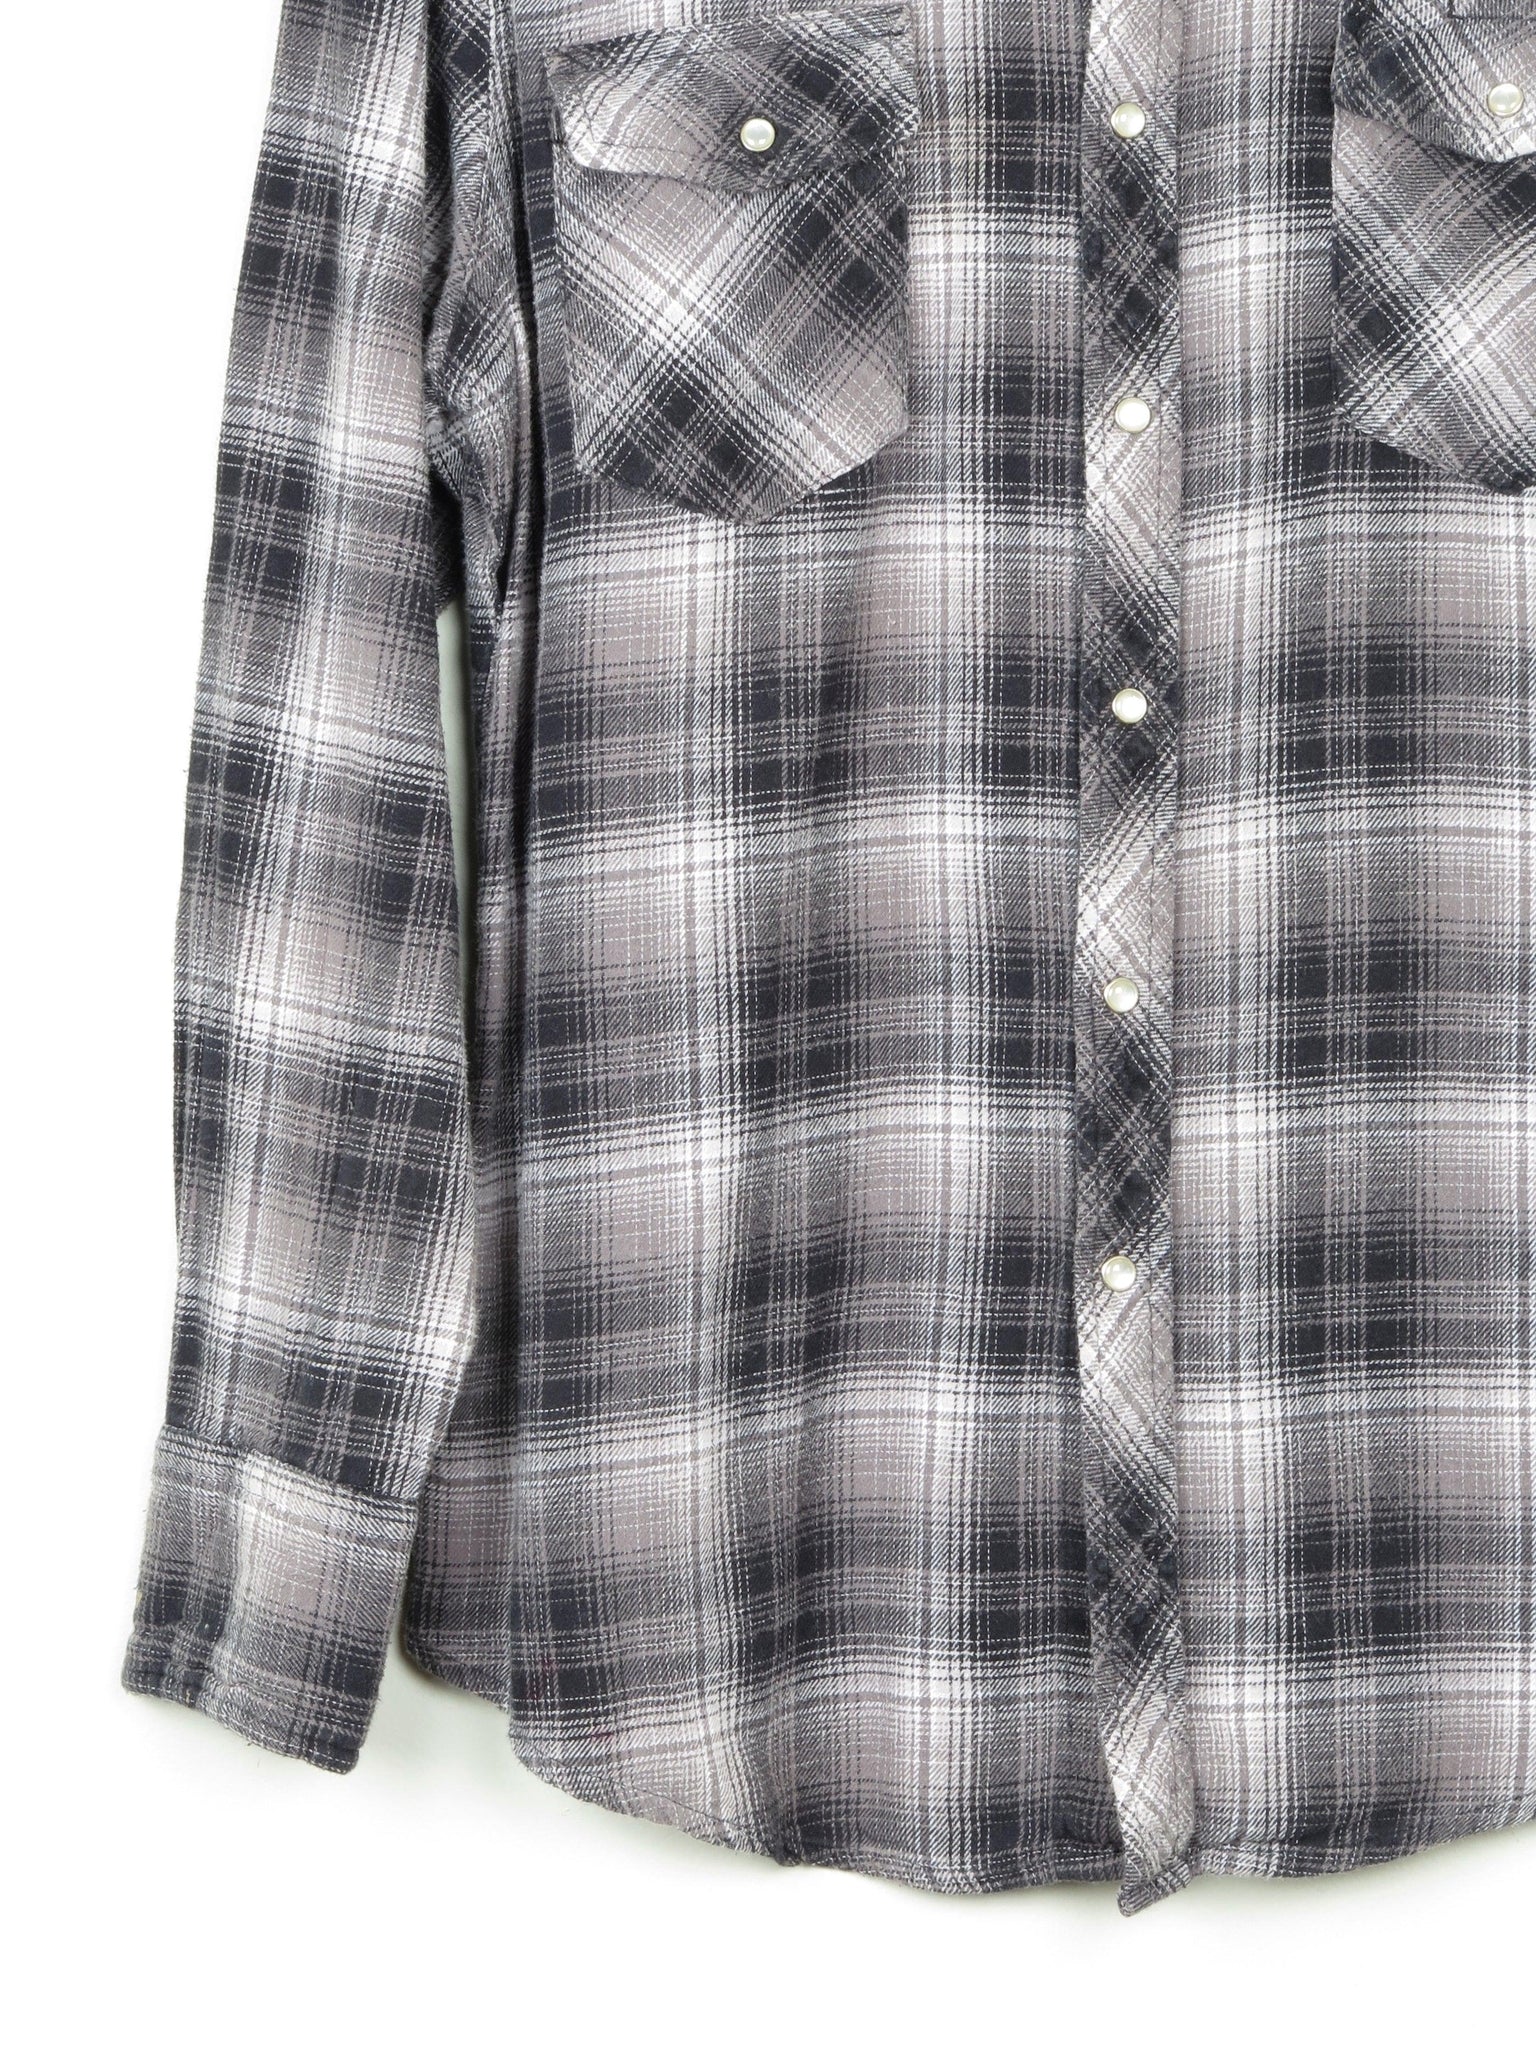 Men's Grey & Black Western Style Wrangler Flannel Shirt M - The Harlequin